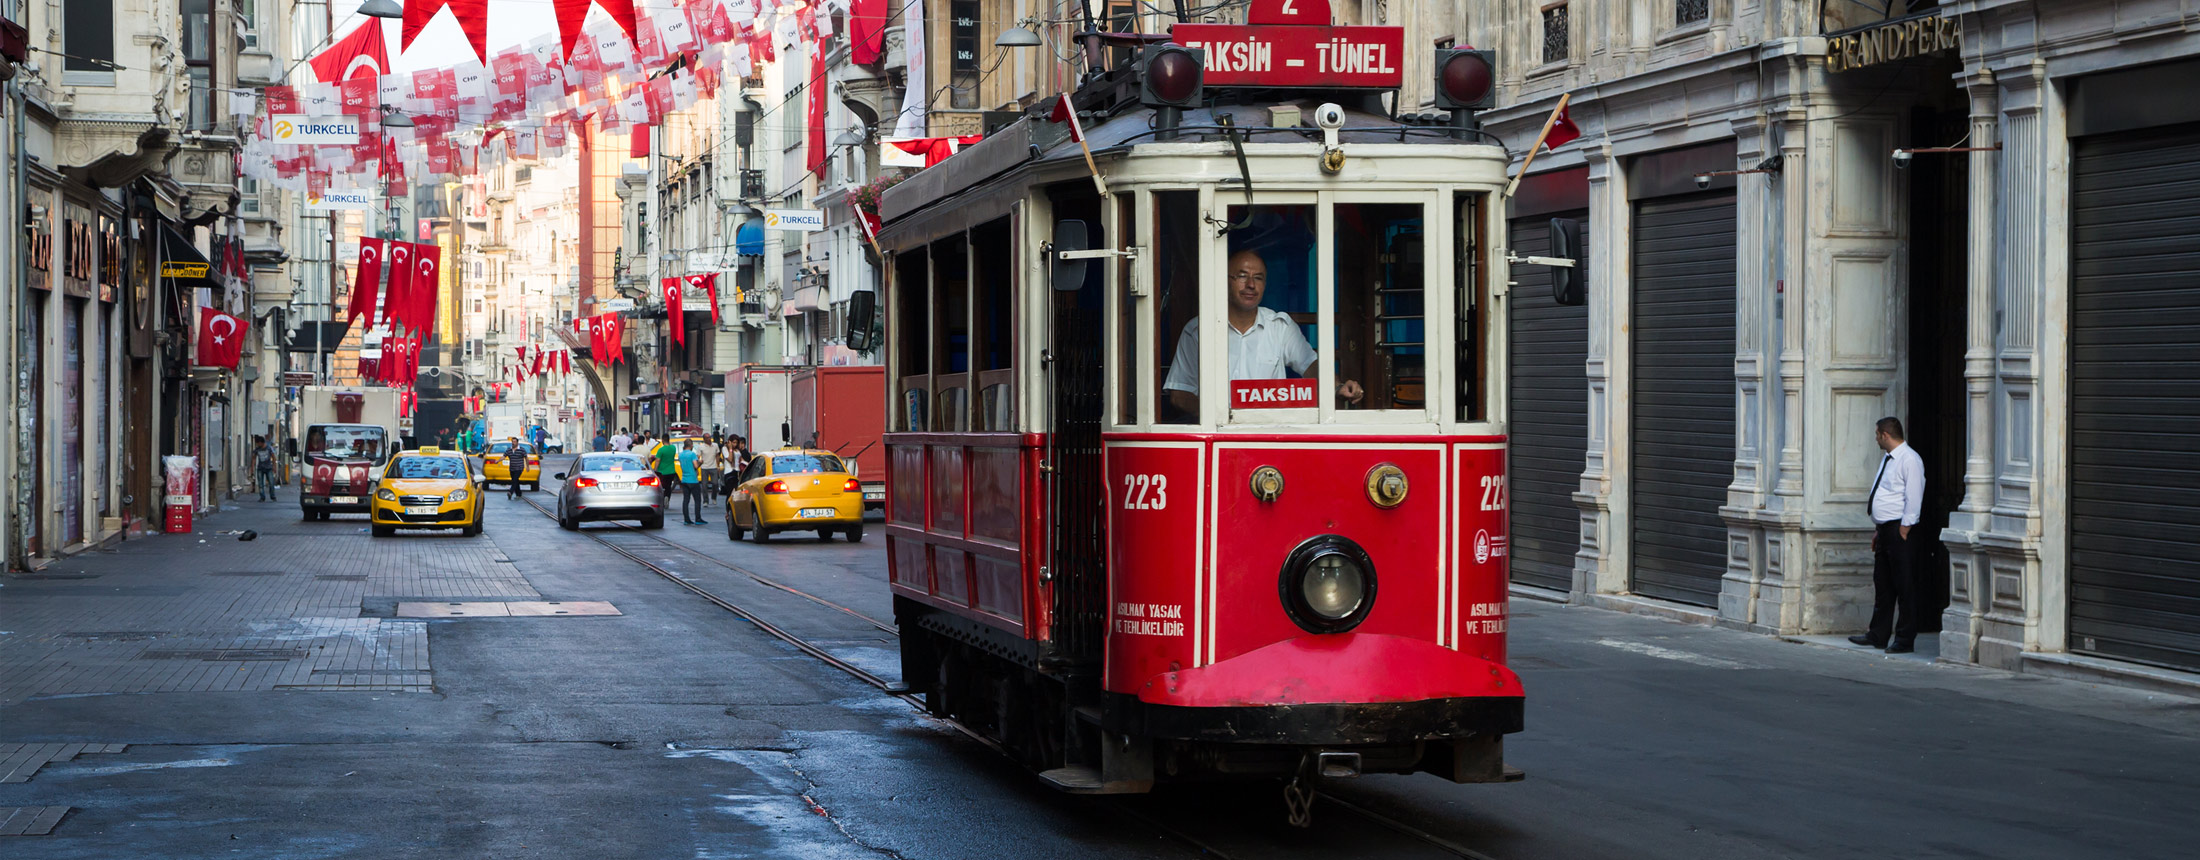 istanbul tram 2200x860